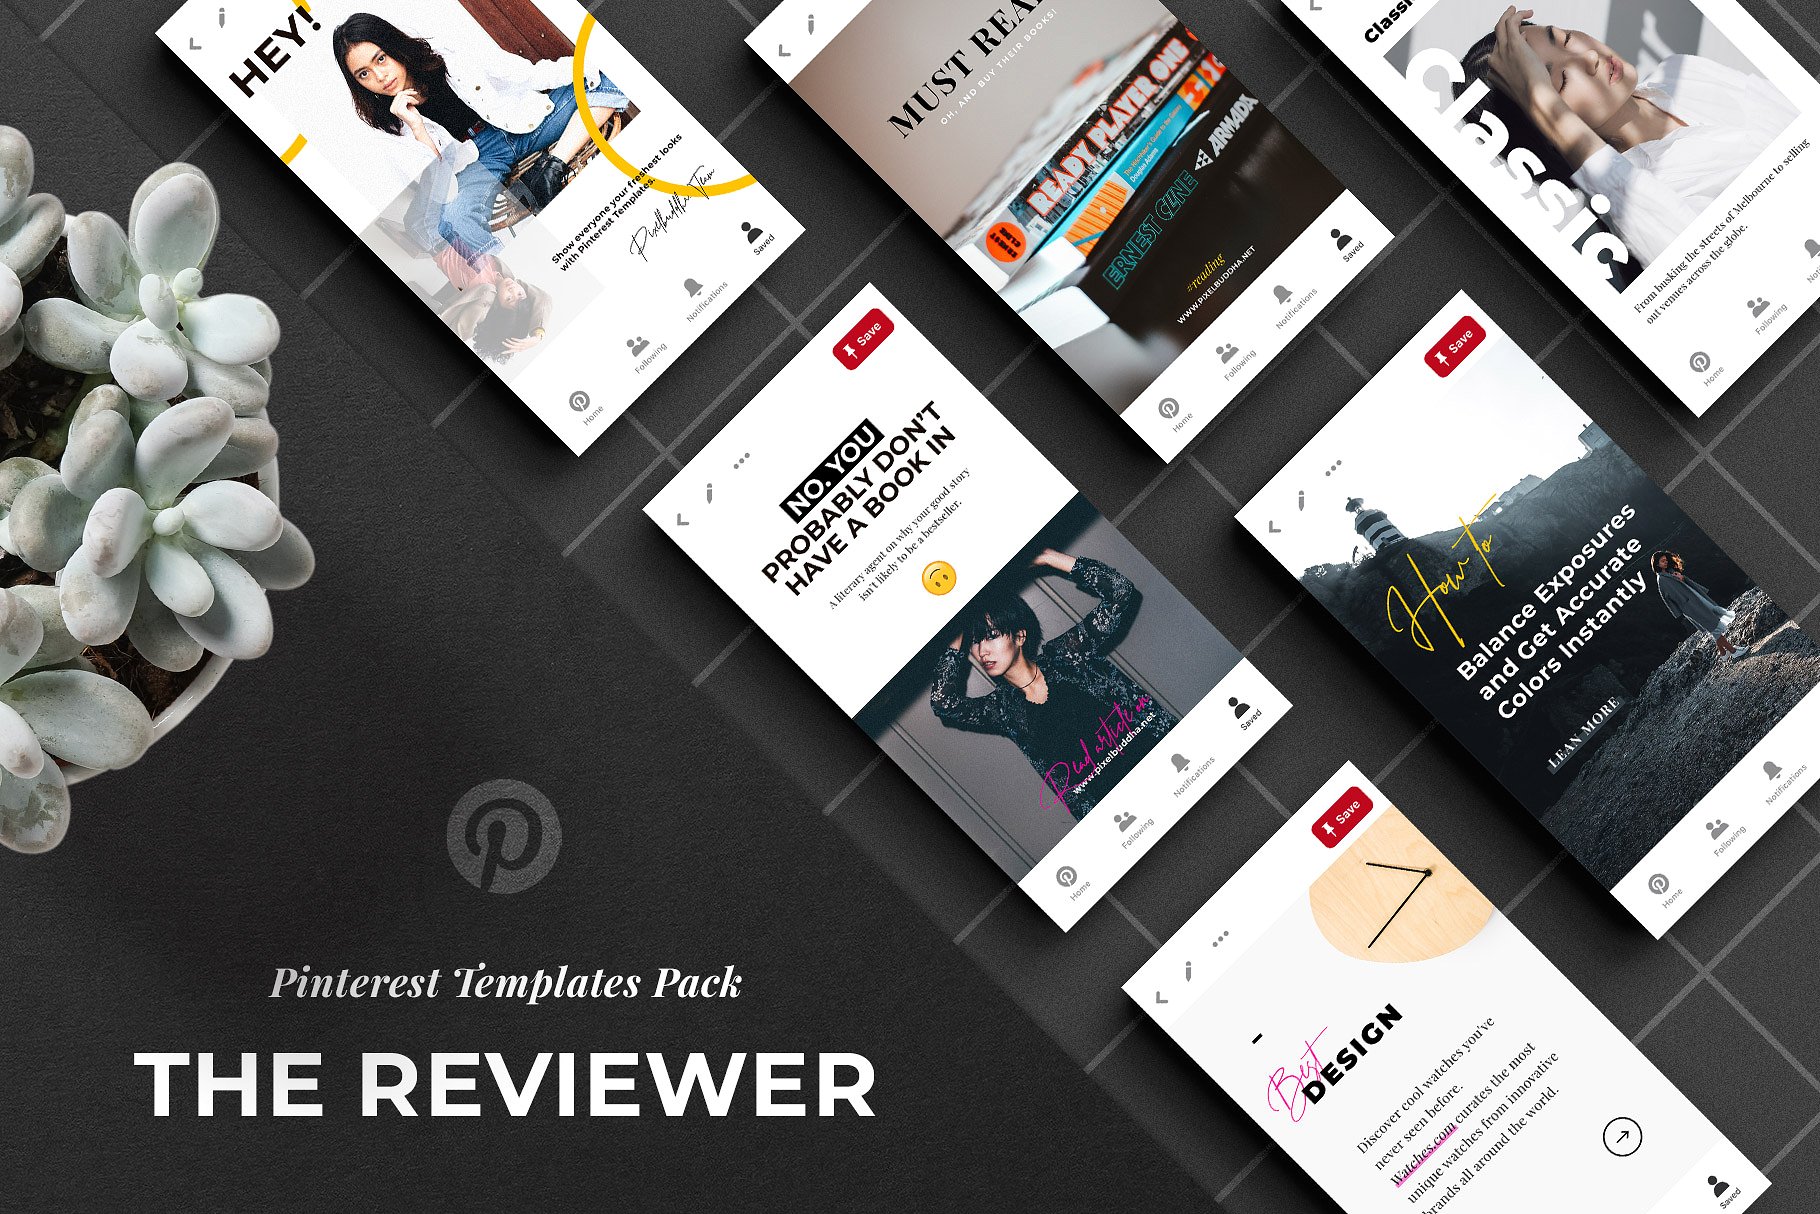 Pinterest品牌营销贴图PSD模板非凡图库精选 The Reviewer Pinterest Templates Set插图